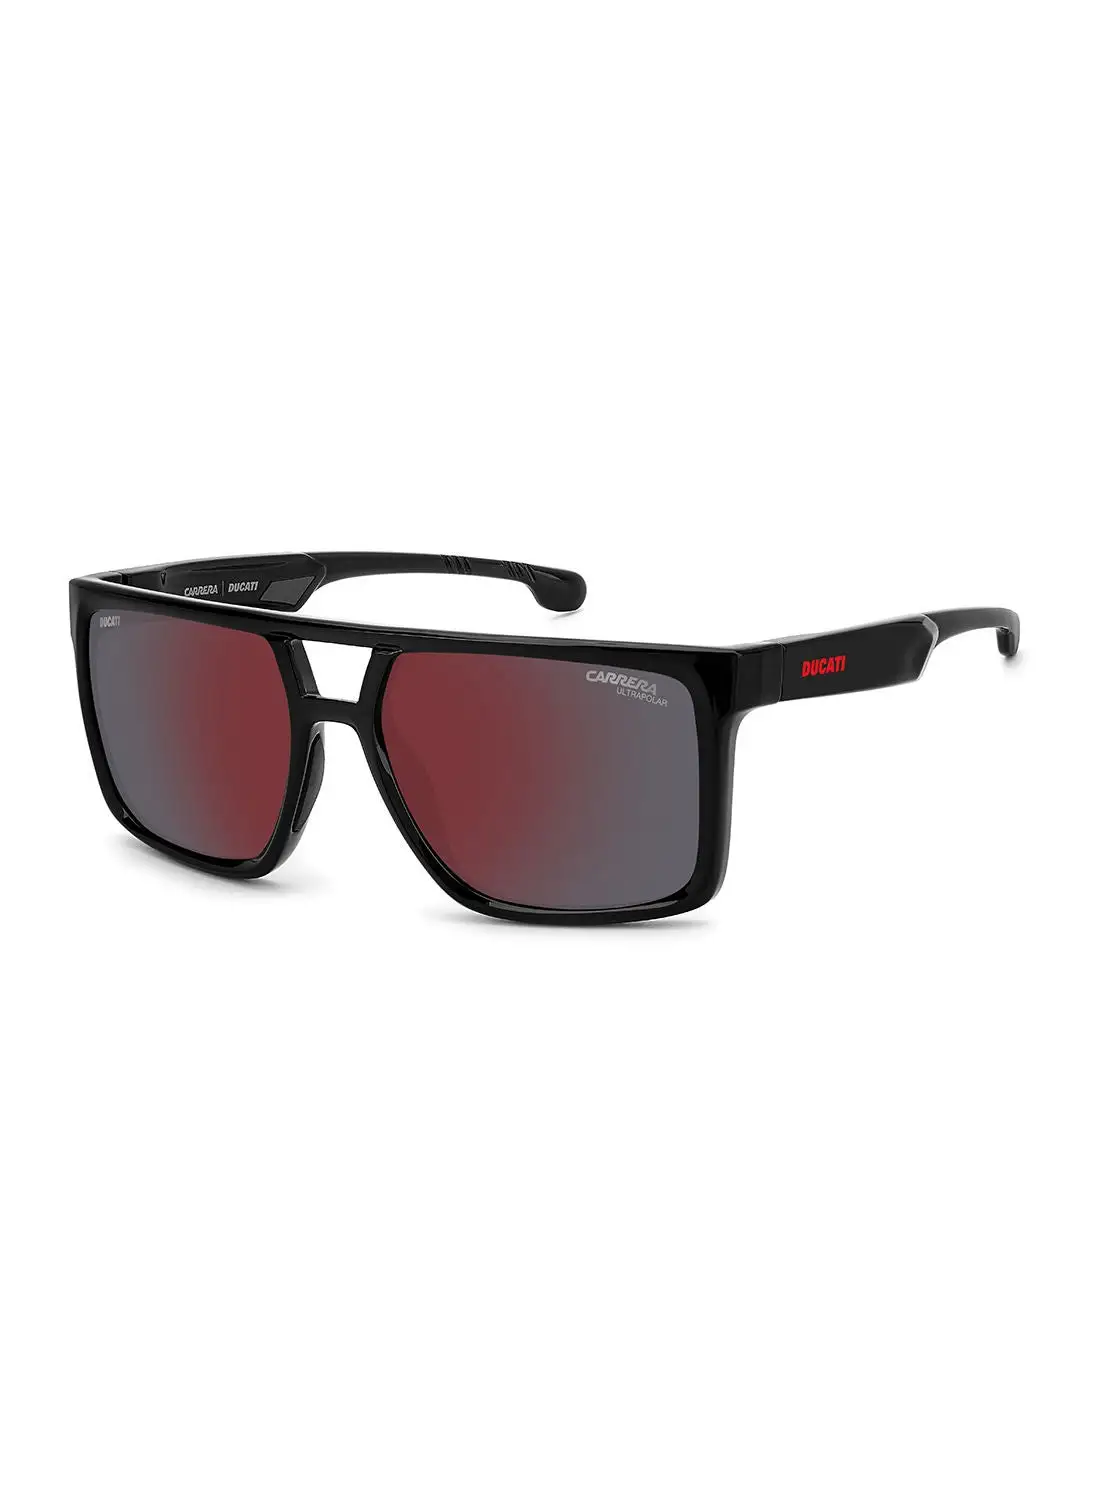 Carrera Men's UV Protection Sunglasses - Carduc 018/S Black 58 - Lens Size: 58 Mm